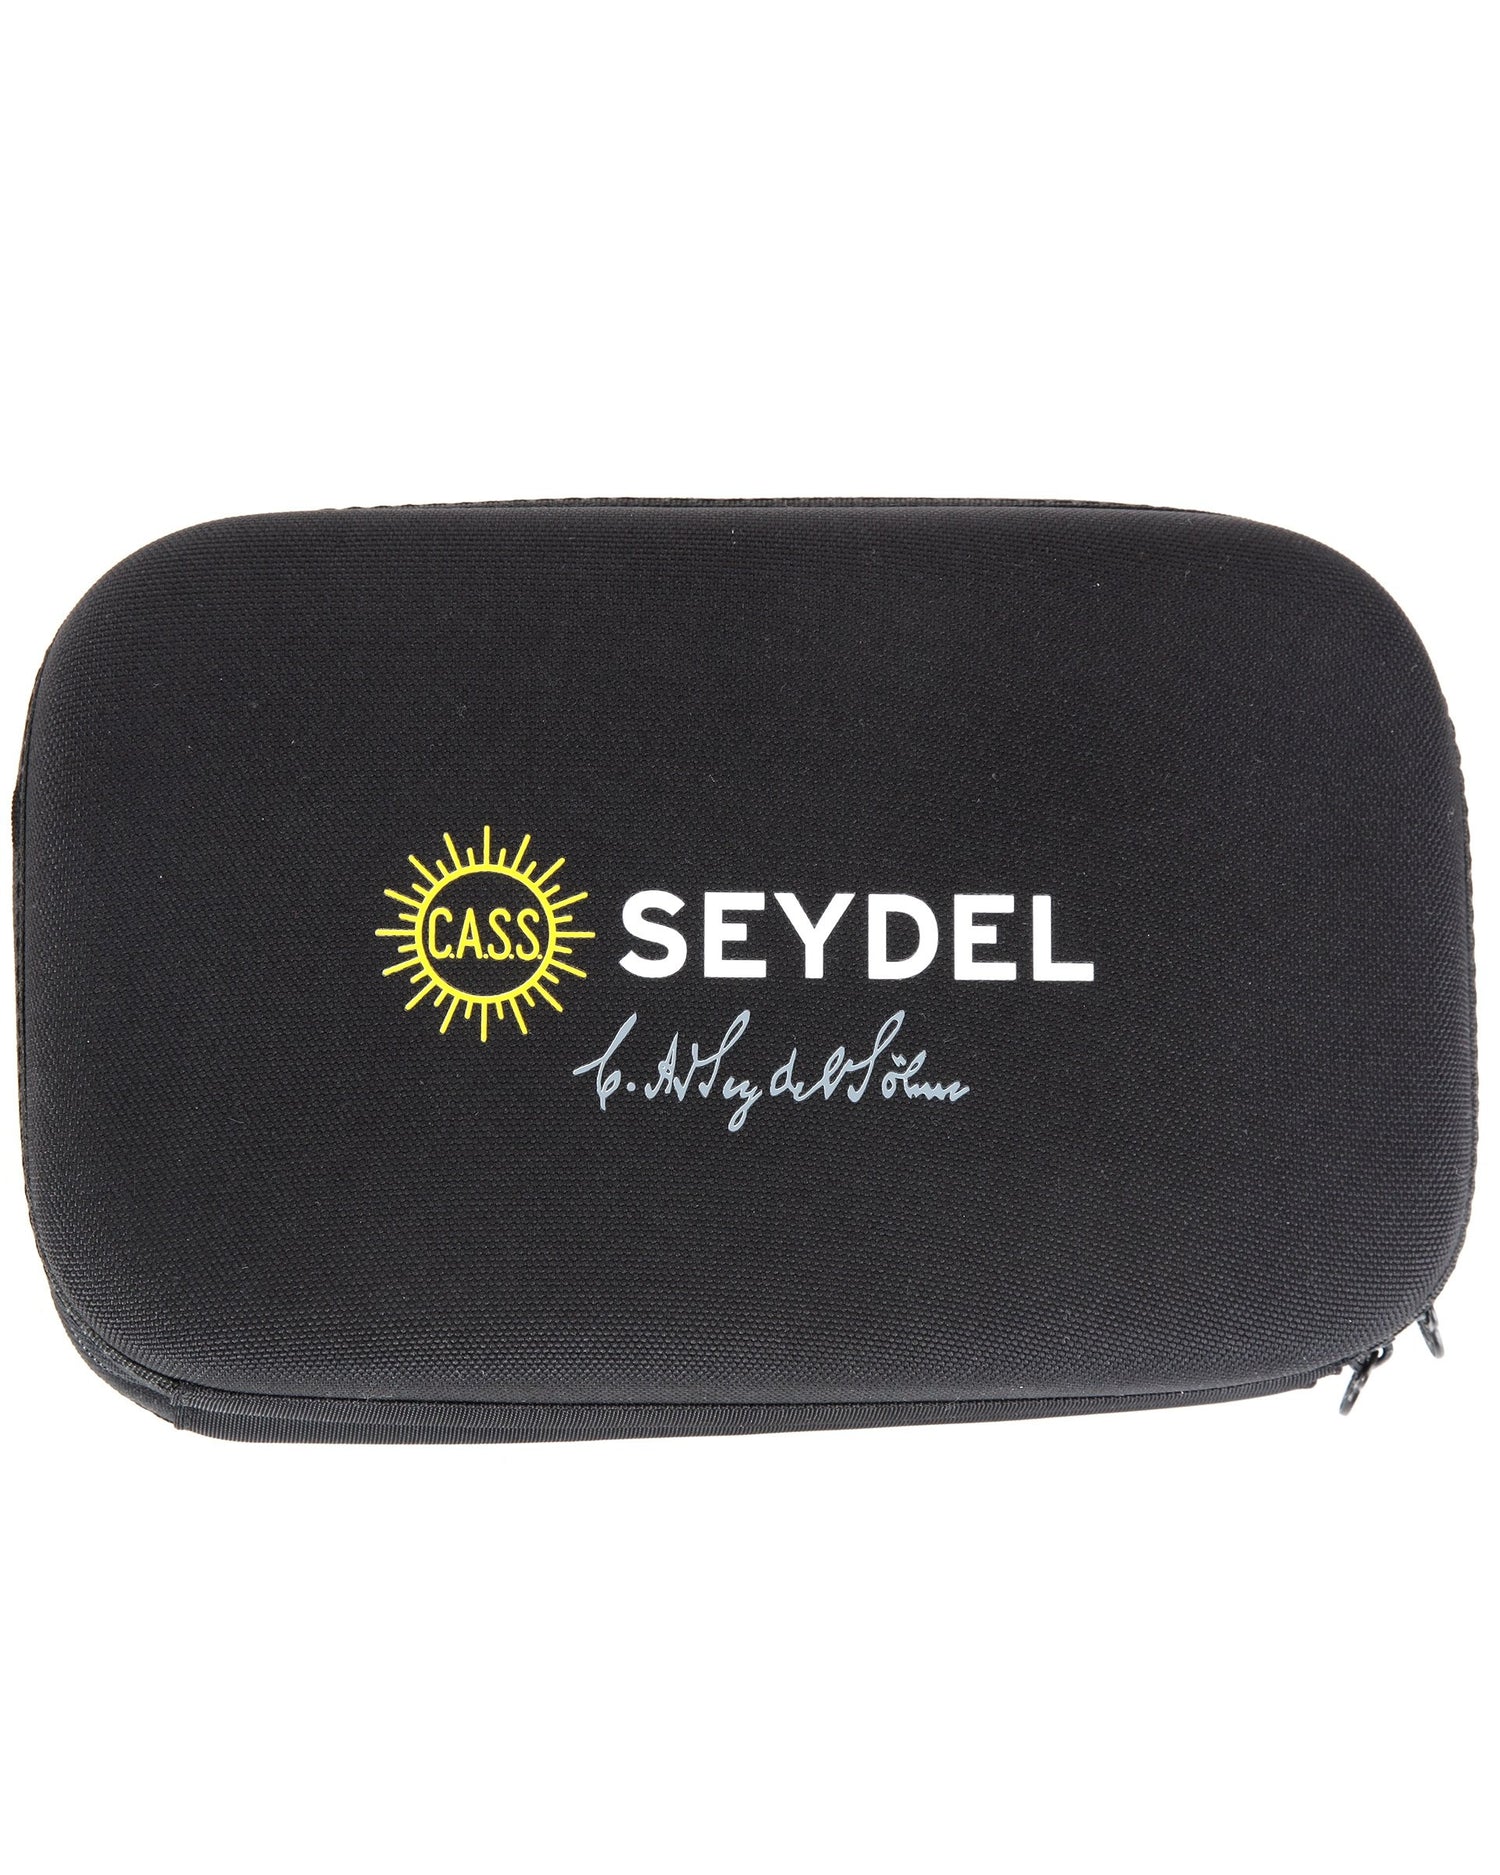 Image 1 of Seydel 20 Harmonica Hardshell Case - SKU# SEY20-196577 : Product Type Accessories & Parts : Elderly Instruments